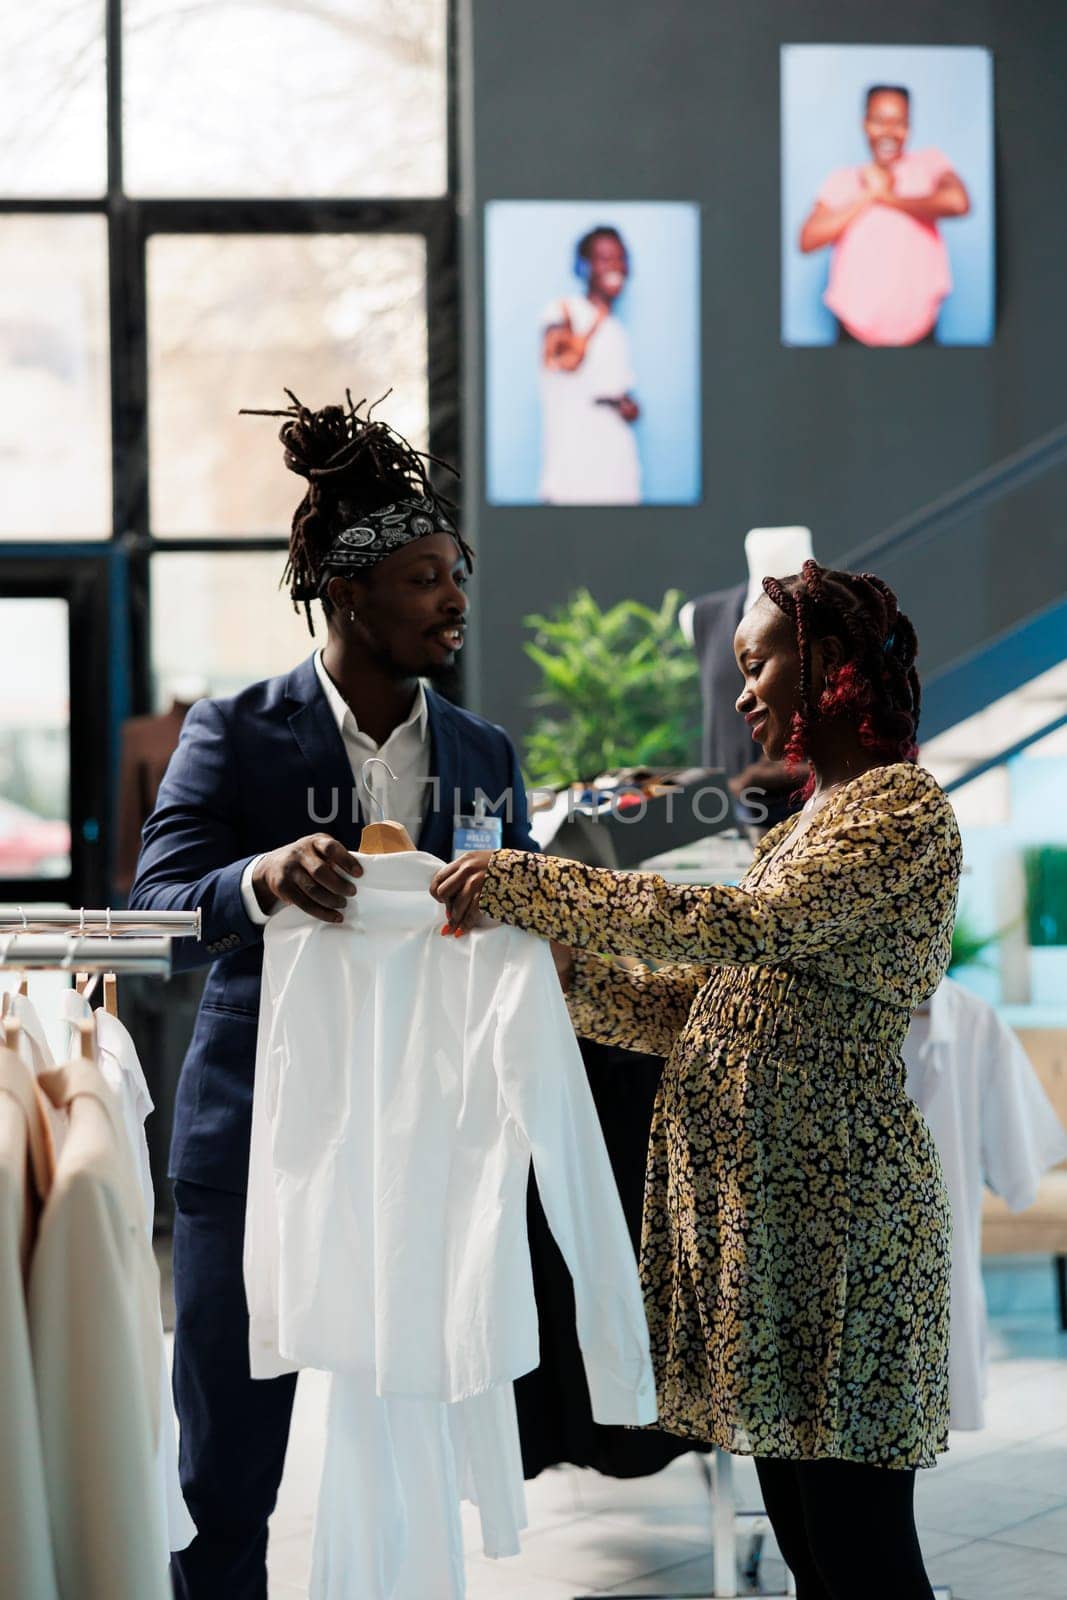 Showroom worker helping customer choosing white shirt by DCStudio